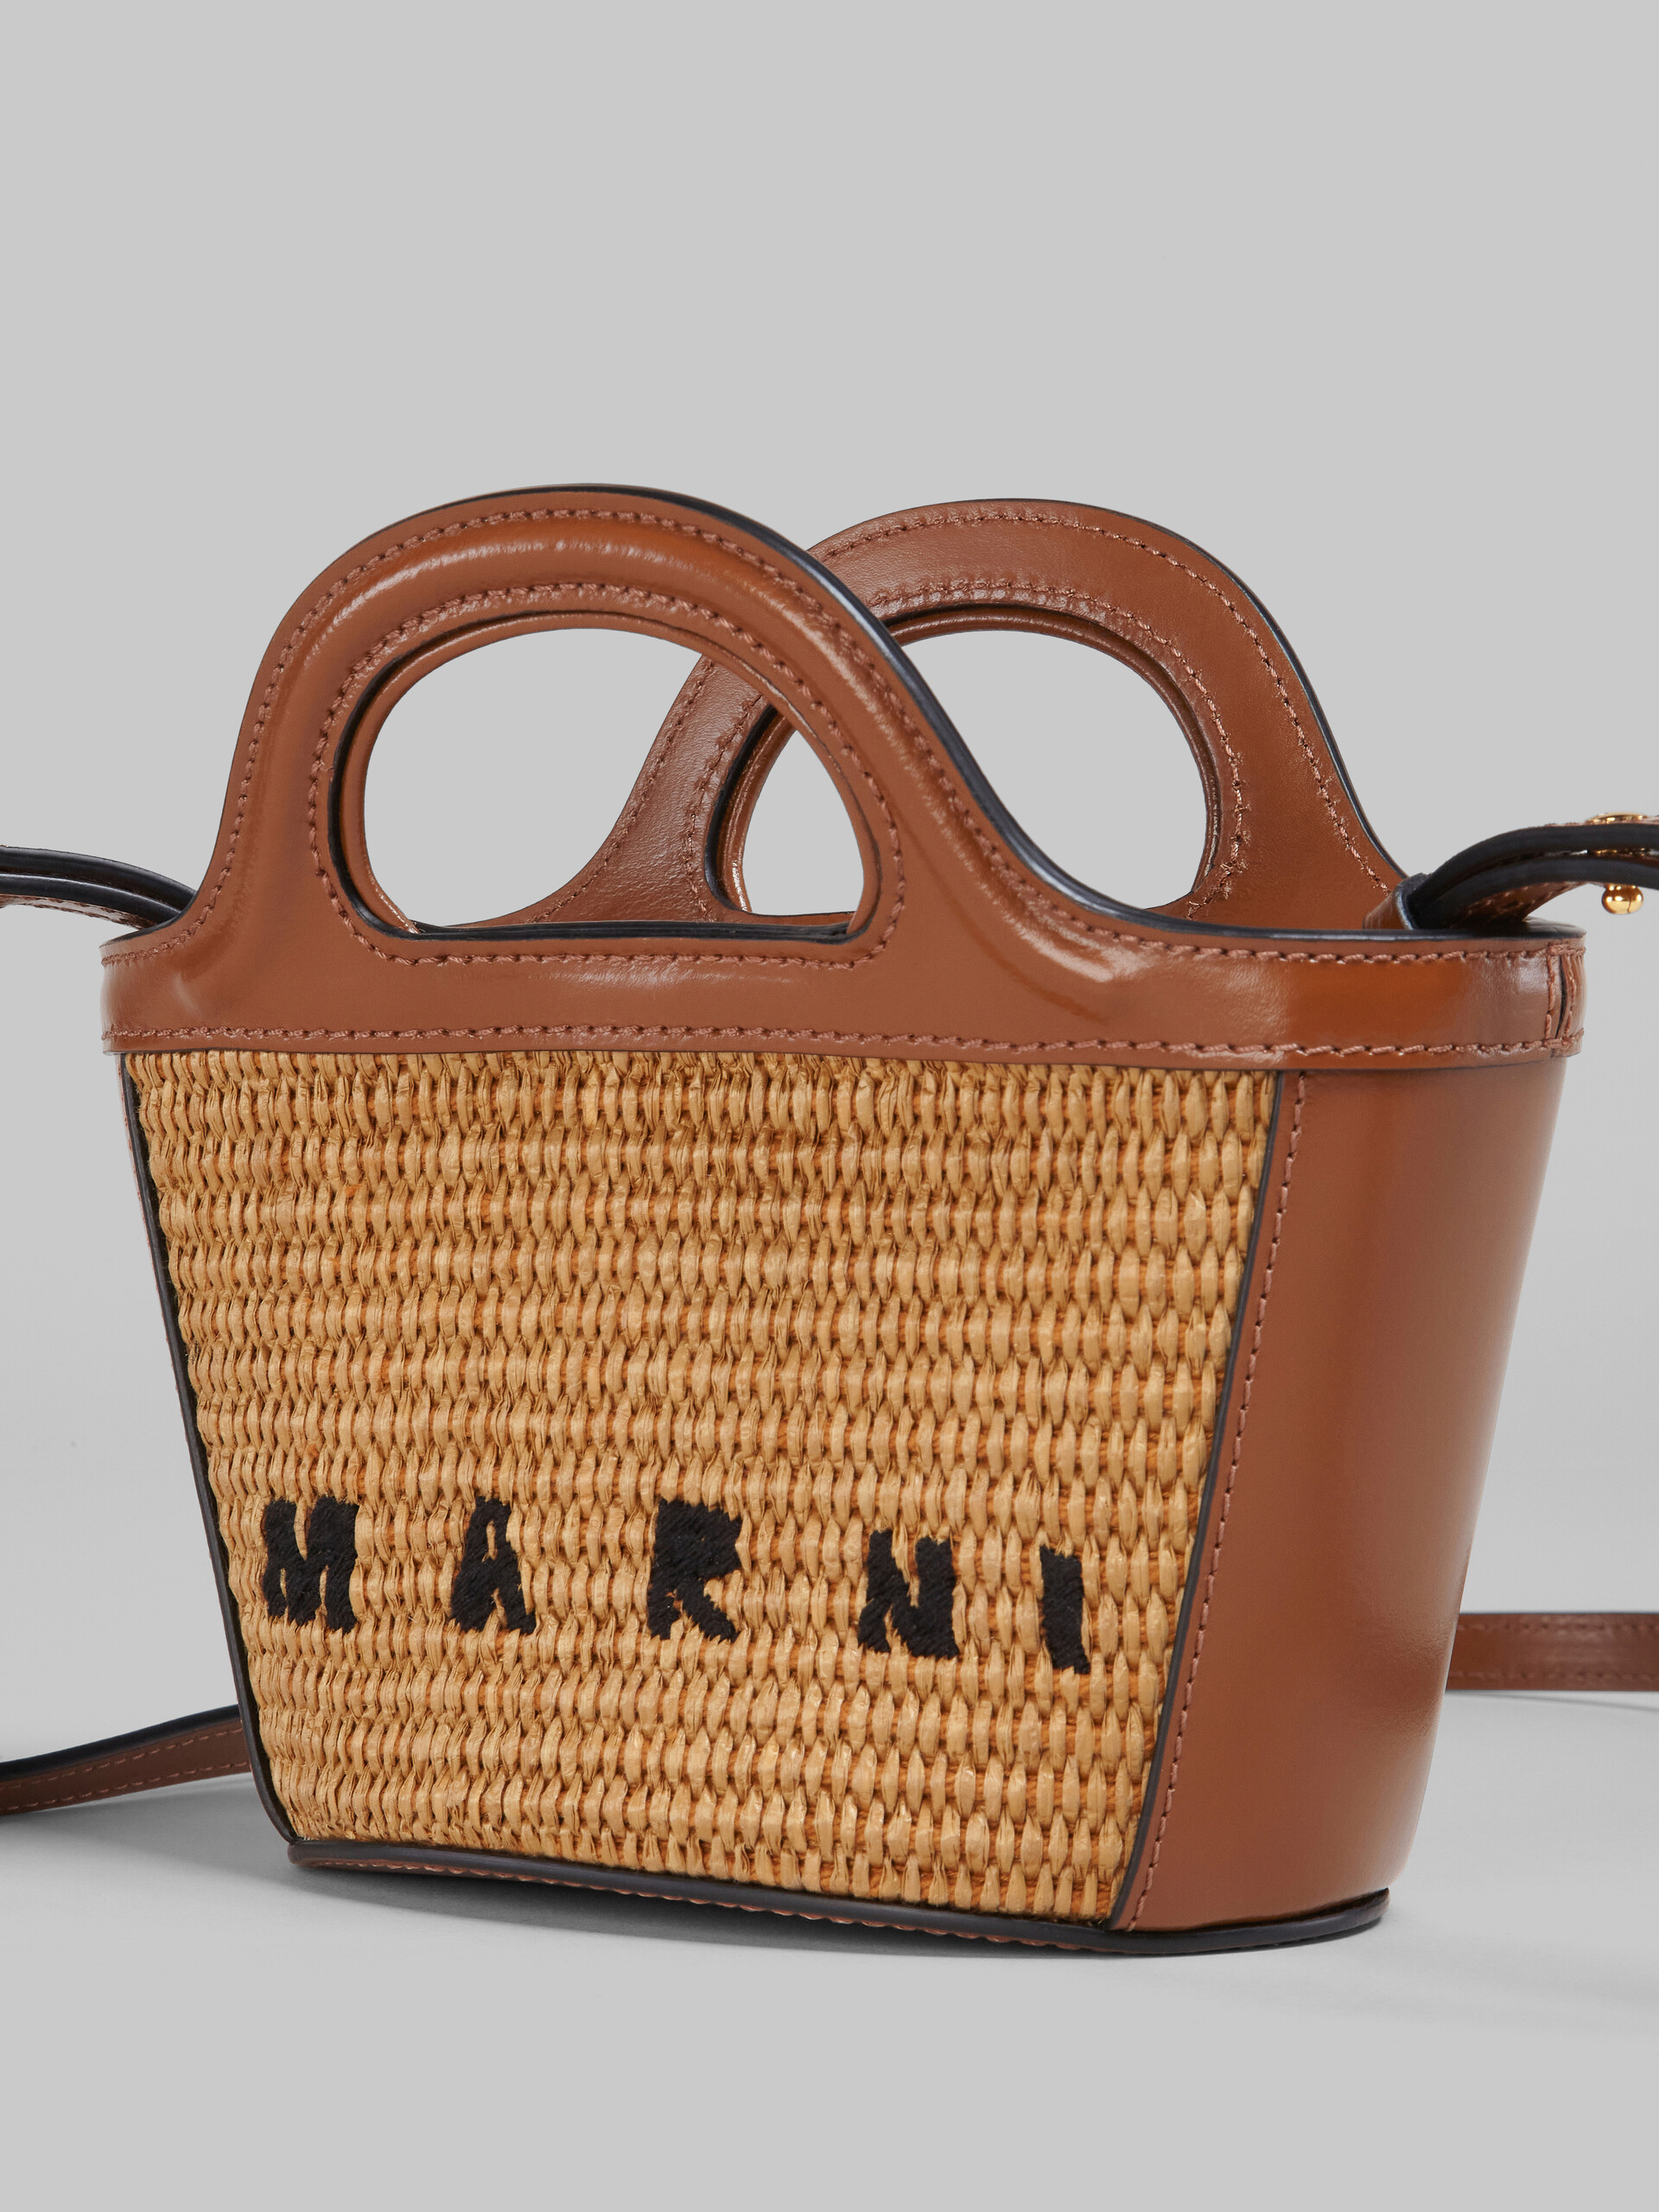 Tropicalia Micro Bag in brown leather and raffia - Handbag - Image 5